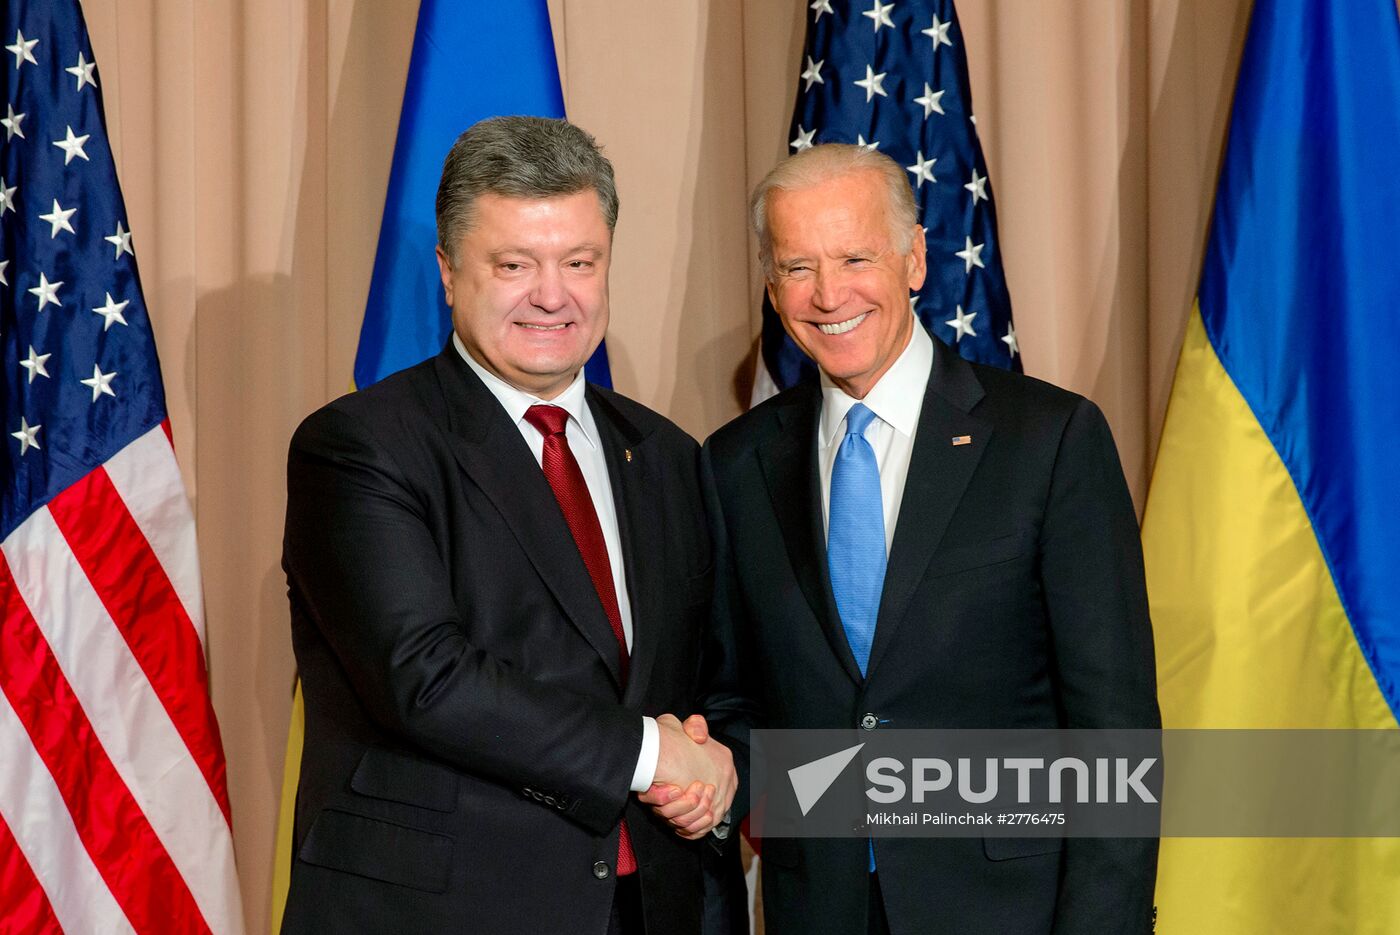 Ukrainian President Petro Poroshenko meets US Vice President Joe Biden and Secretary of State John Kerry